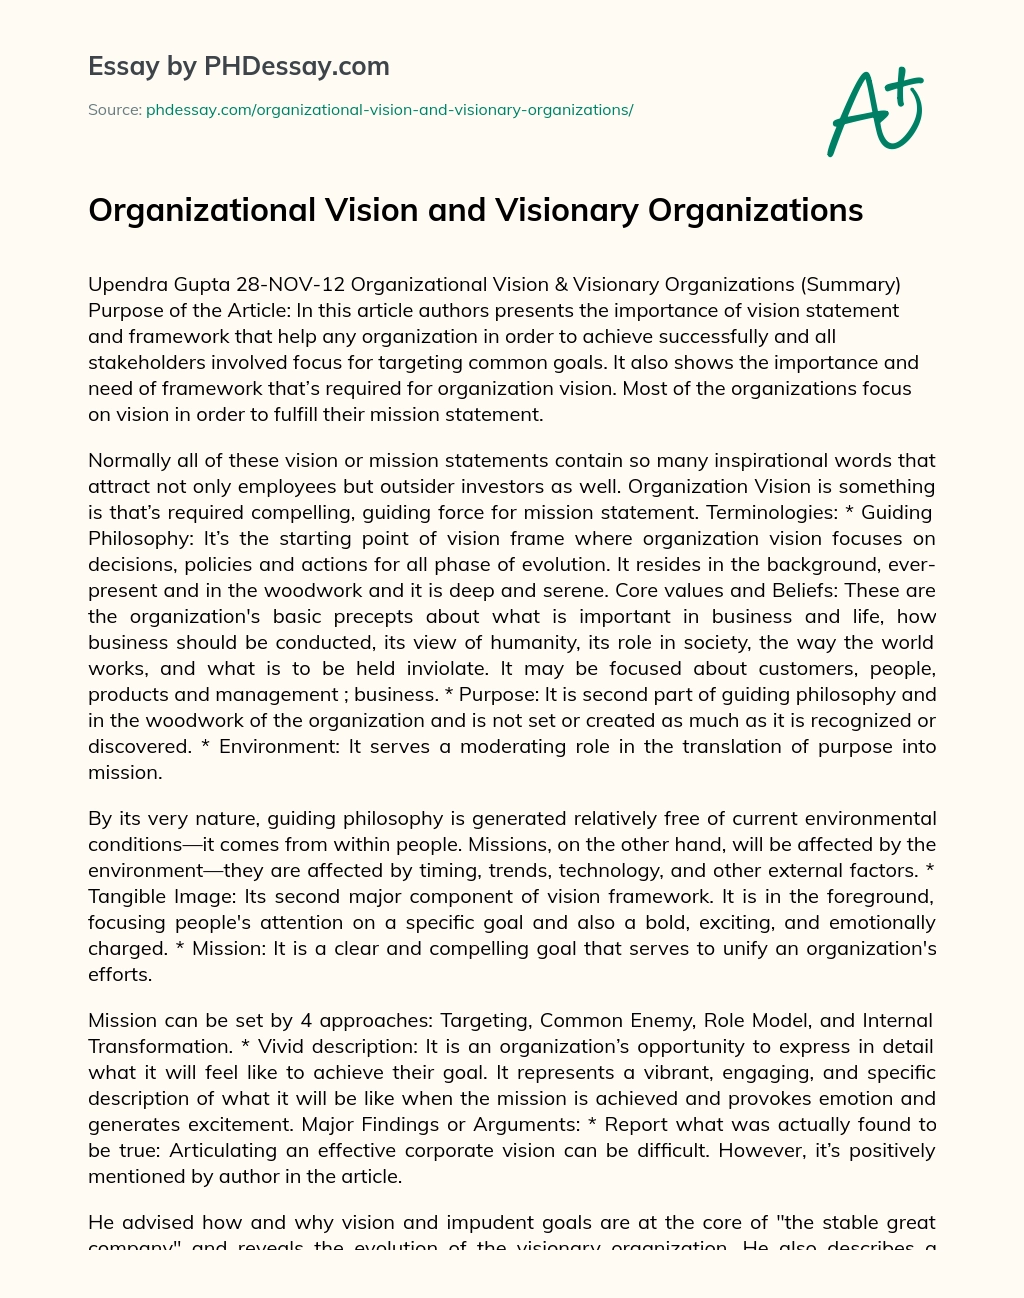 Organizational Vision and Visionary Organizations essay